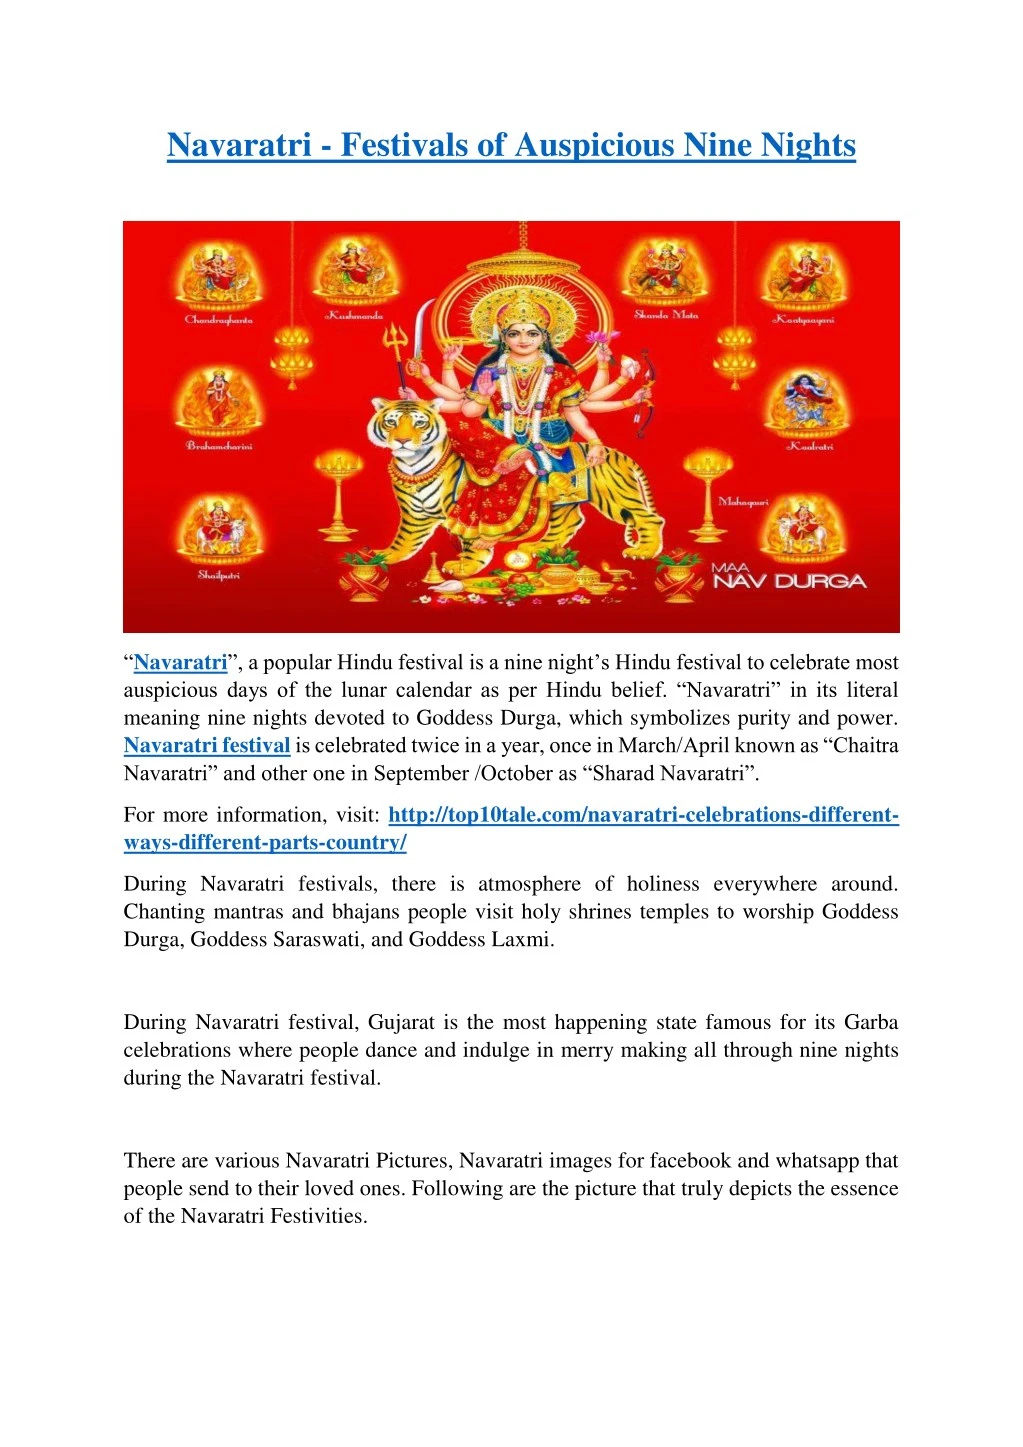 navaratri festivals of auspicious nine nights